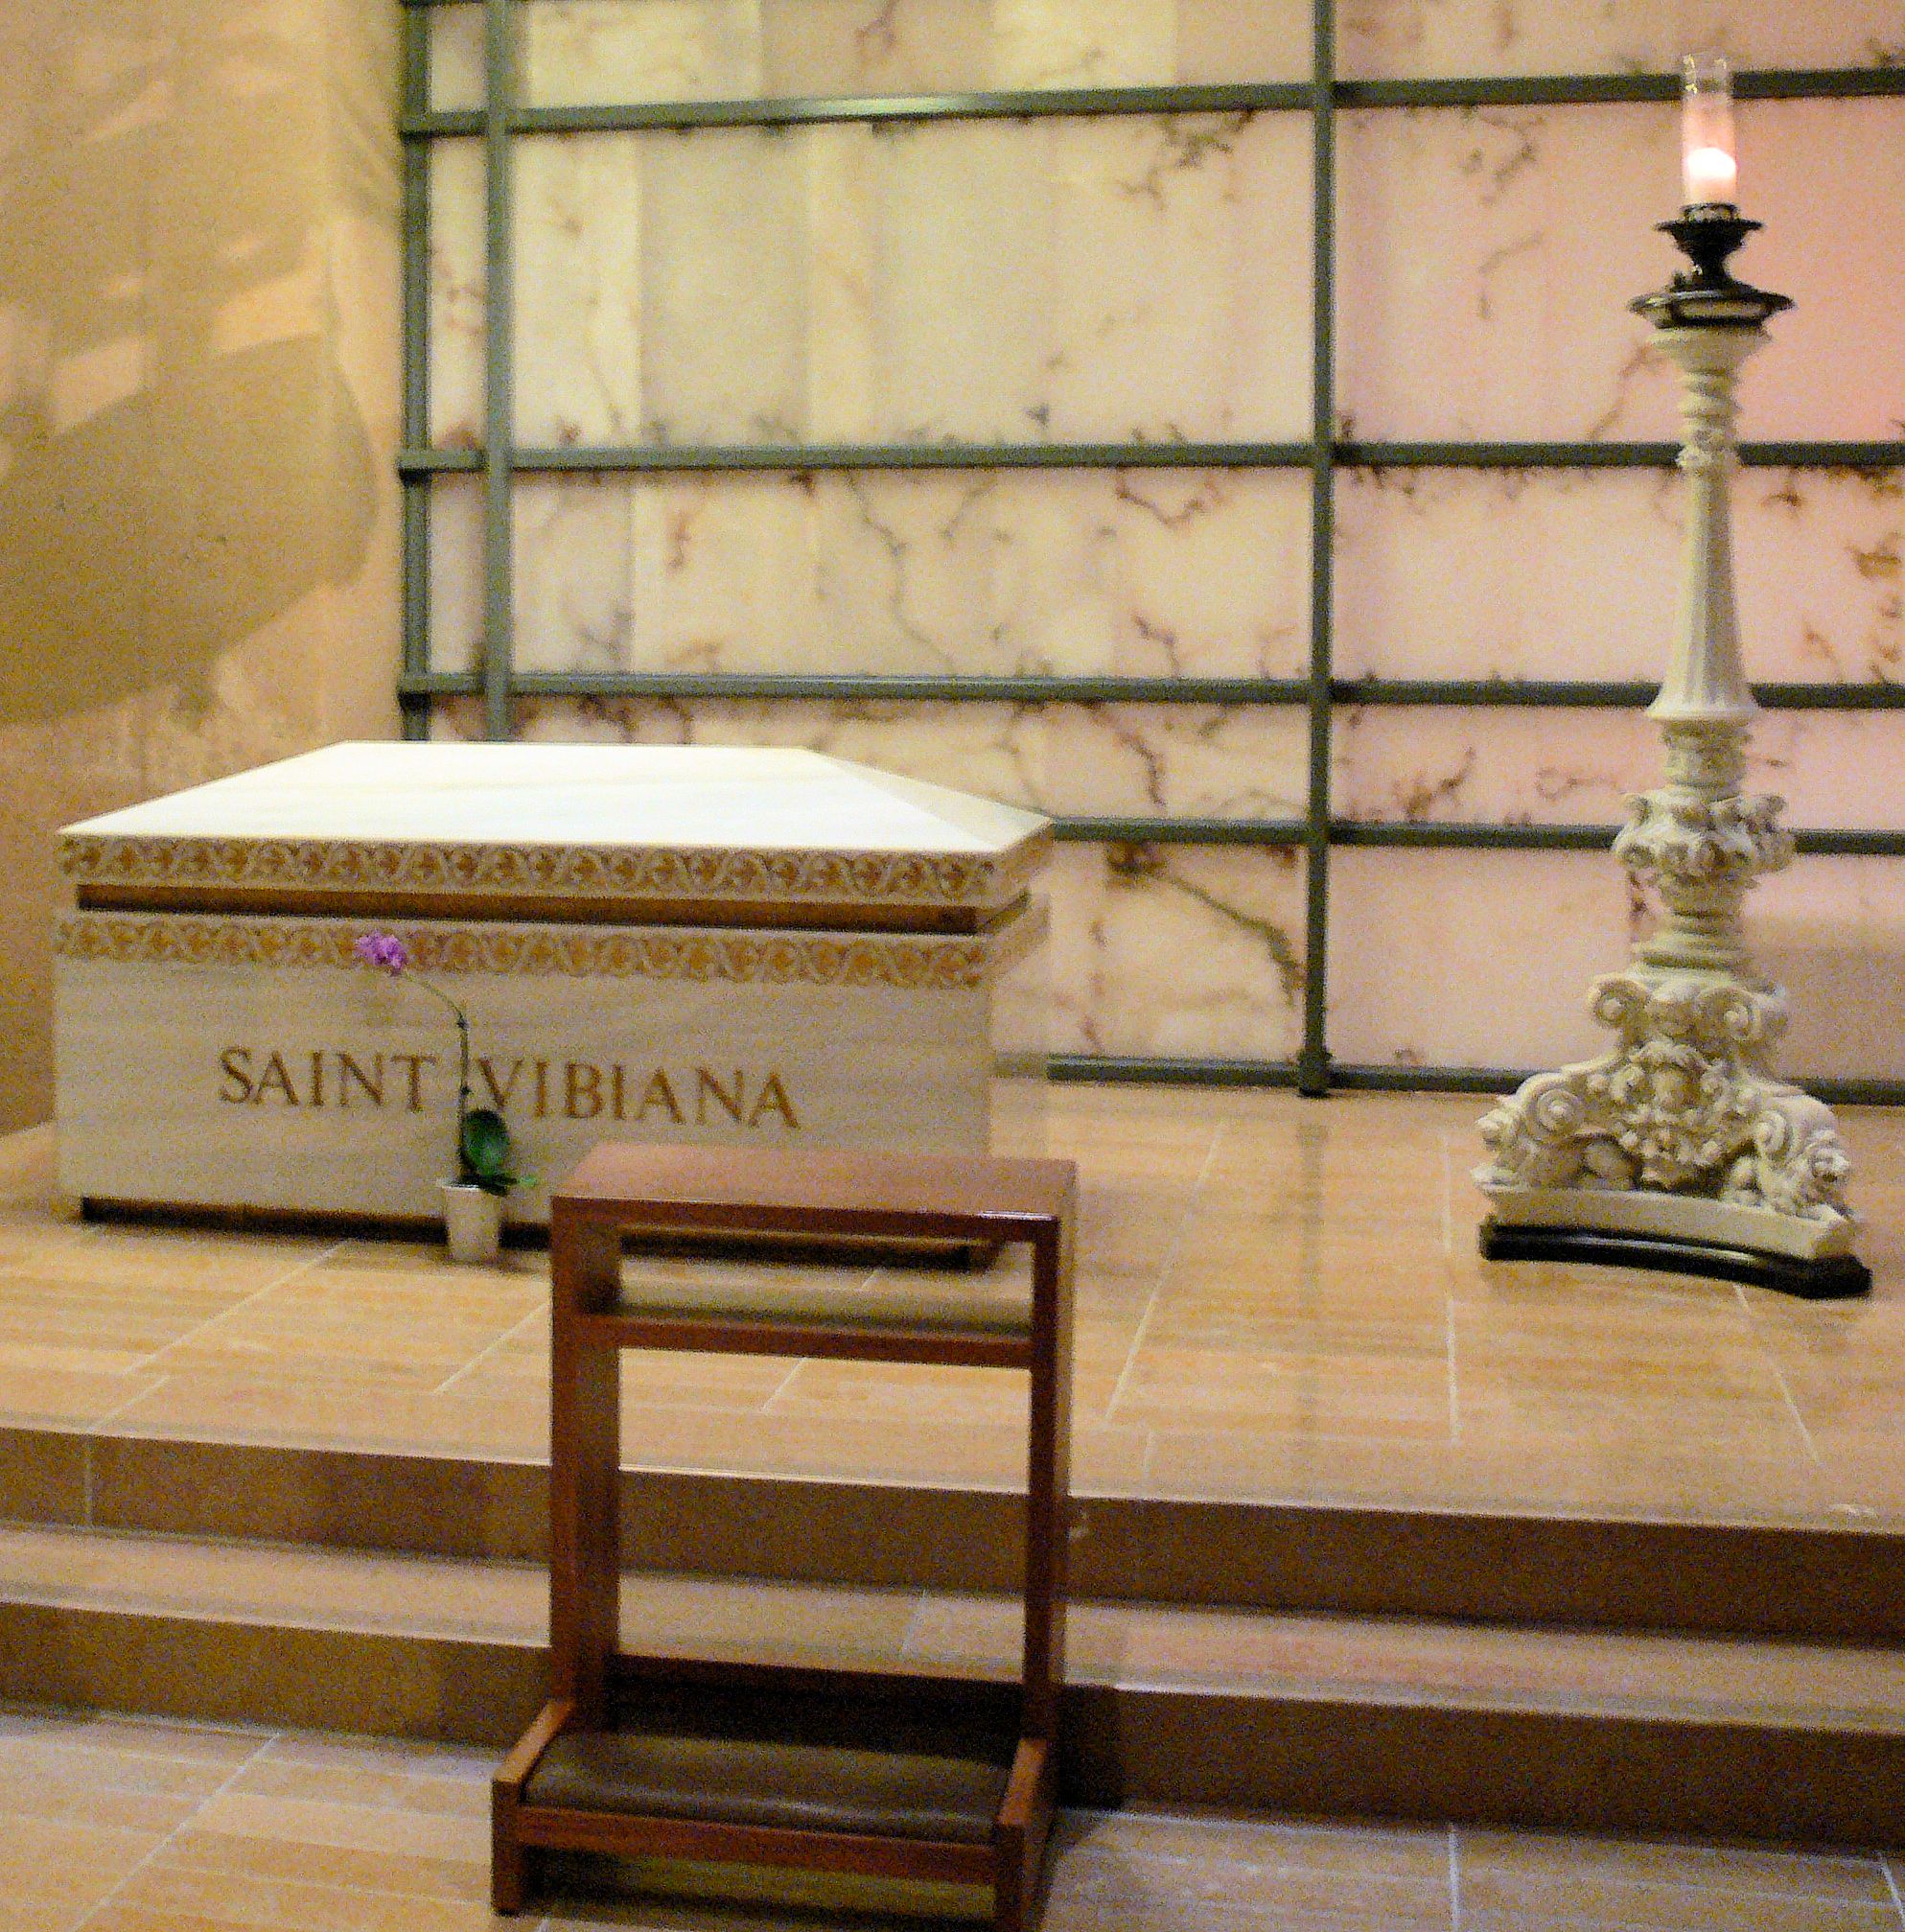 Vibianas Reliquien in der Kathedrale in Los Angeles